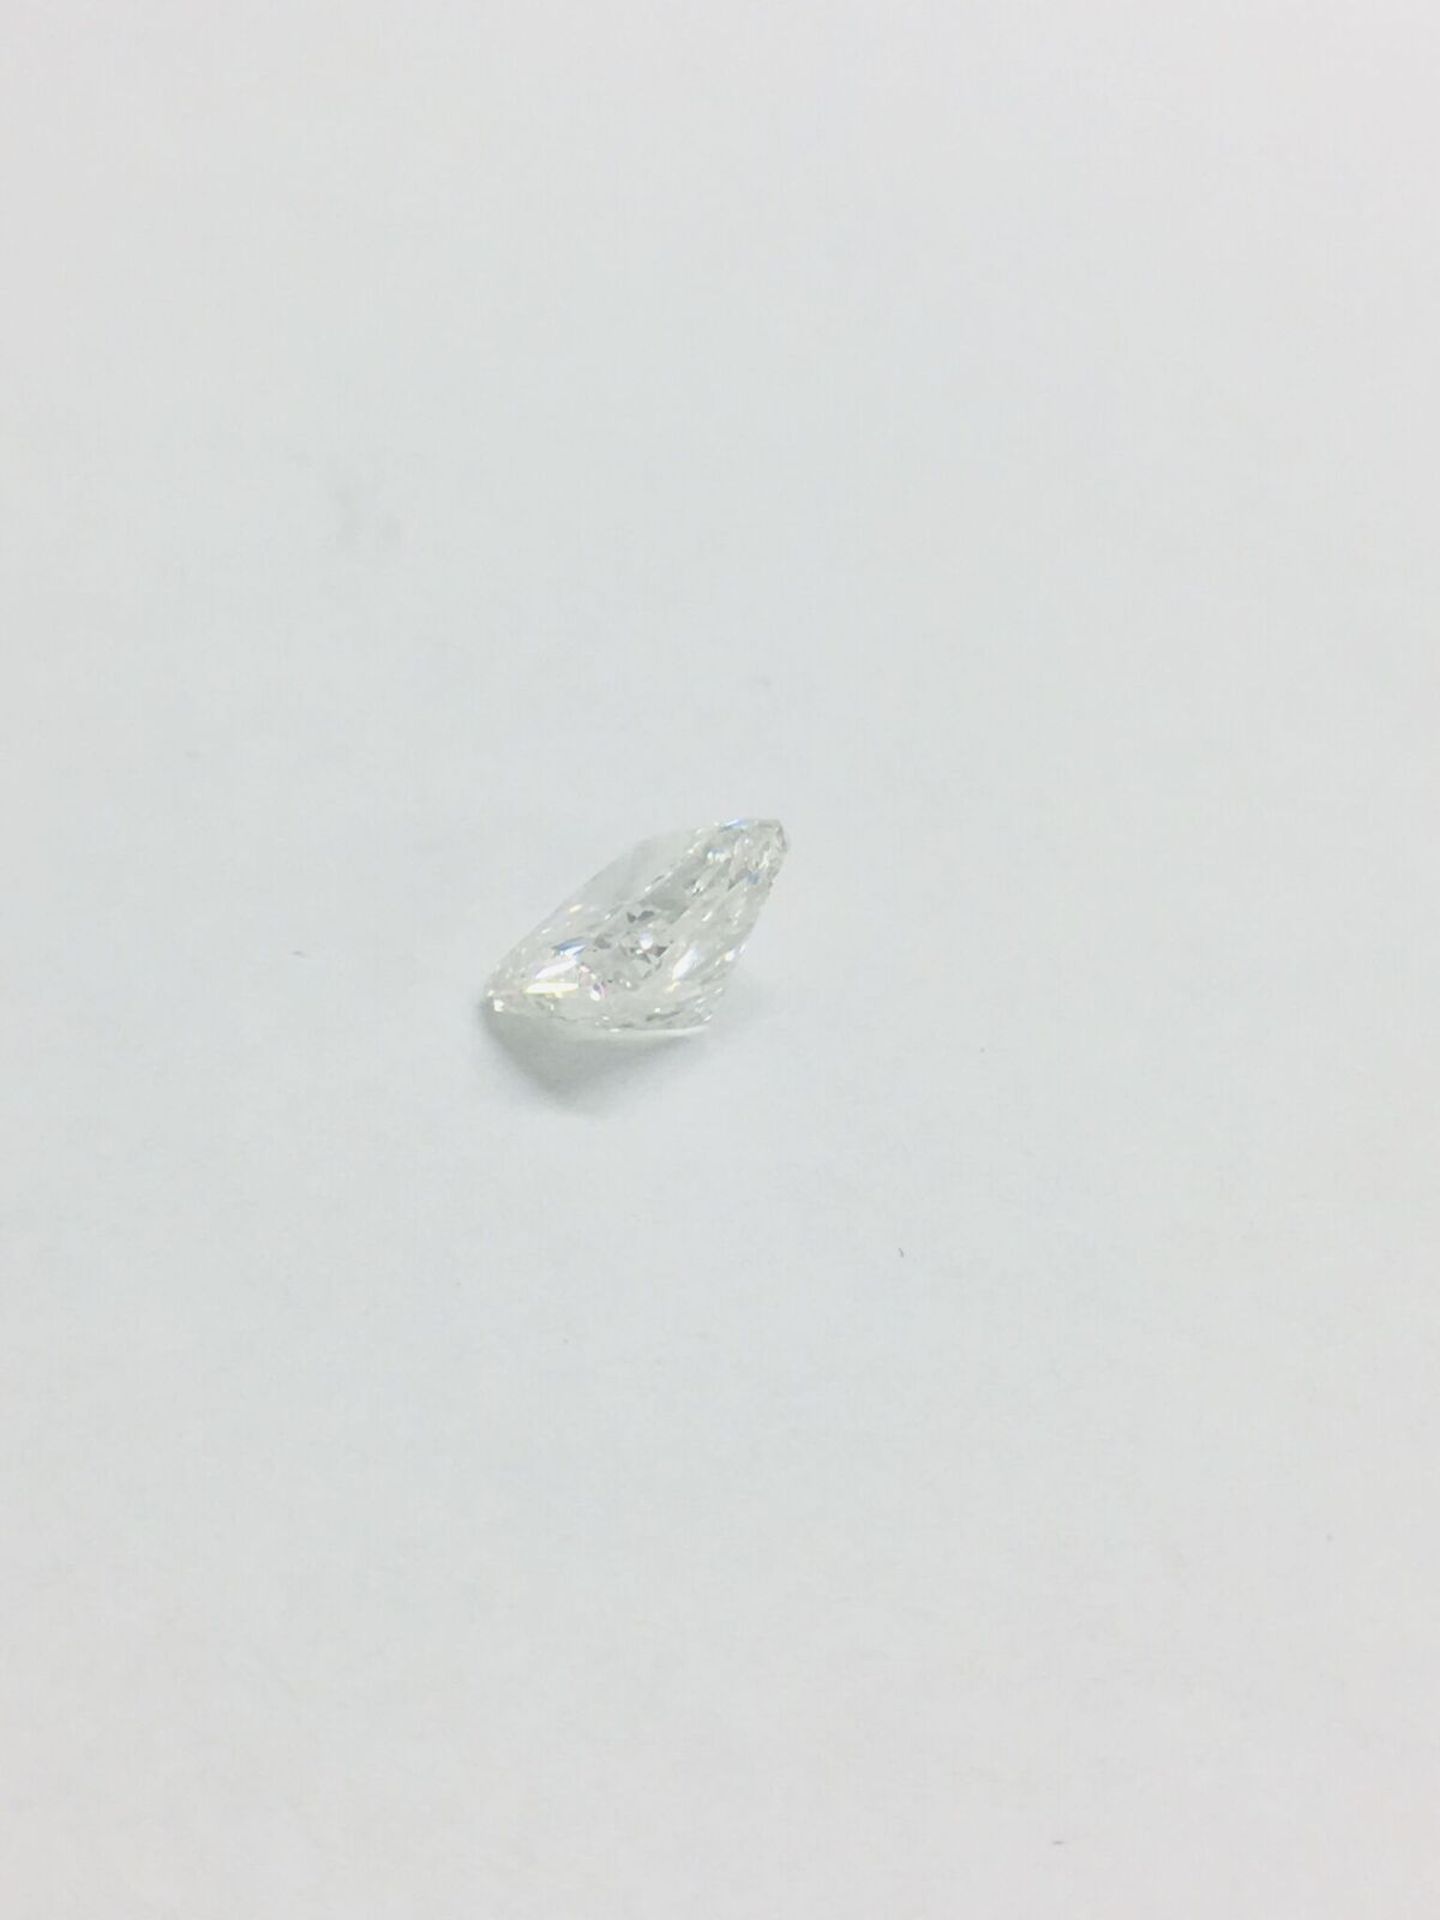 1.10Ct Radiant Cut Natural Diamond - Image 3 of 3